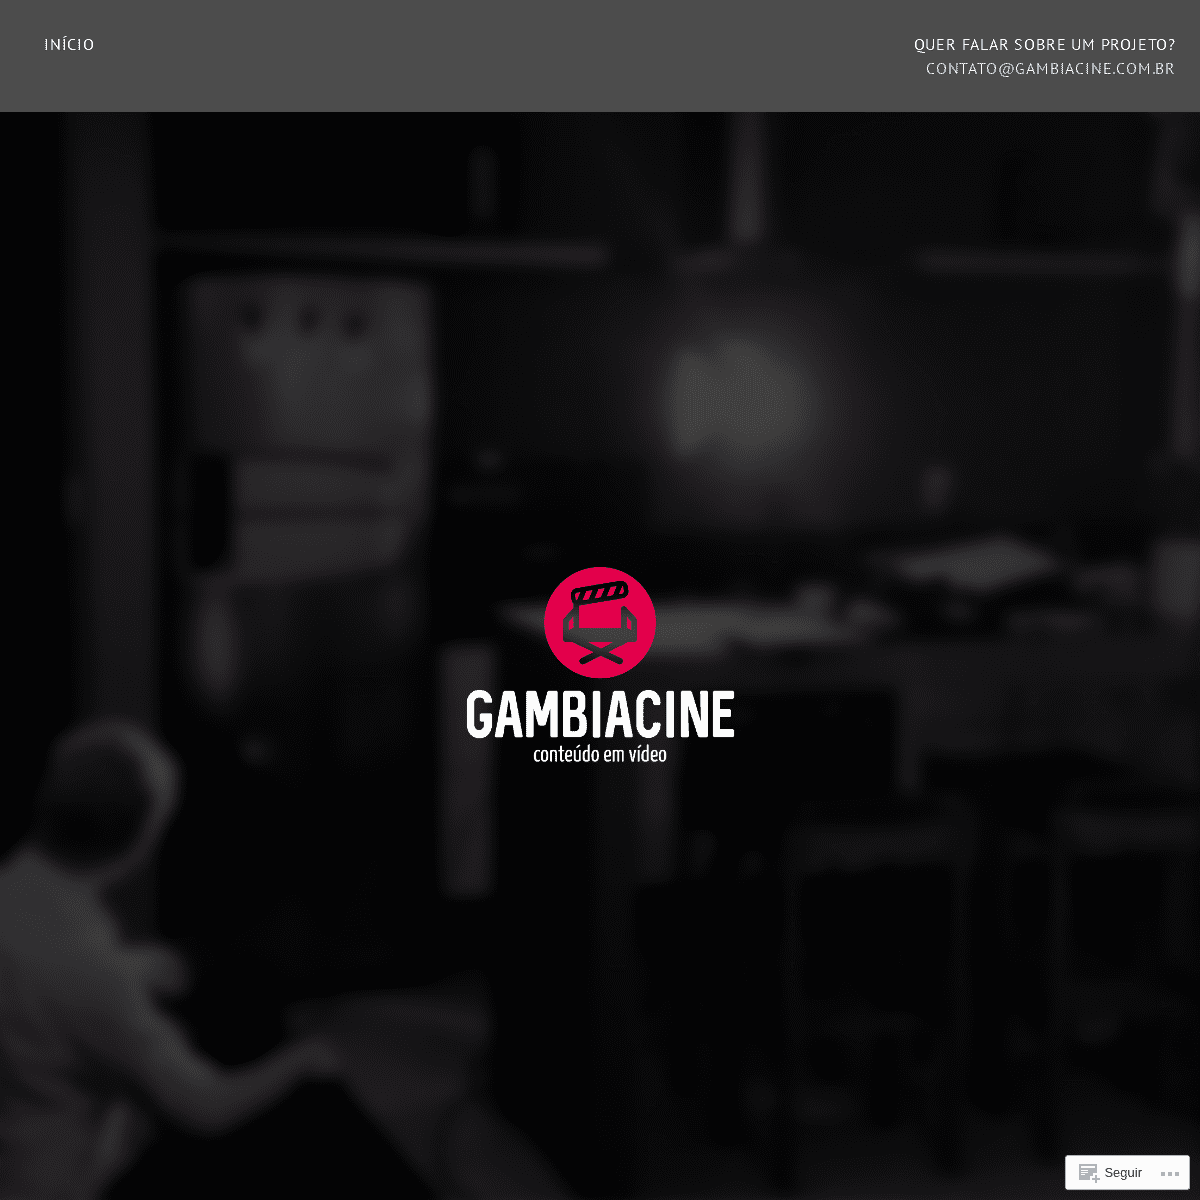 A complete backup of gambiacine.com.br